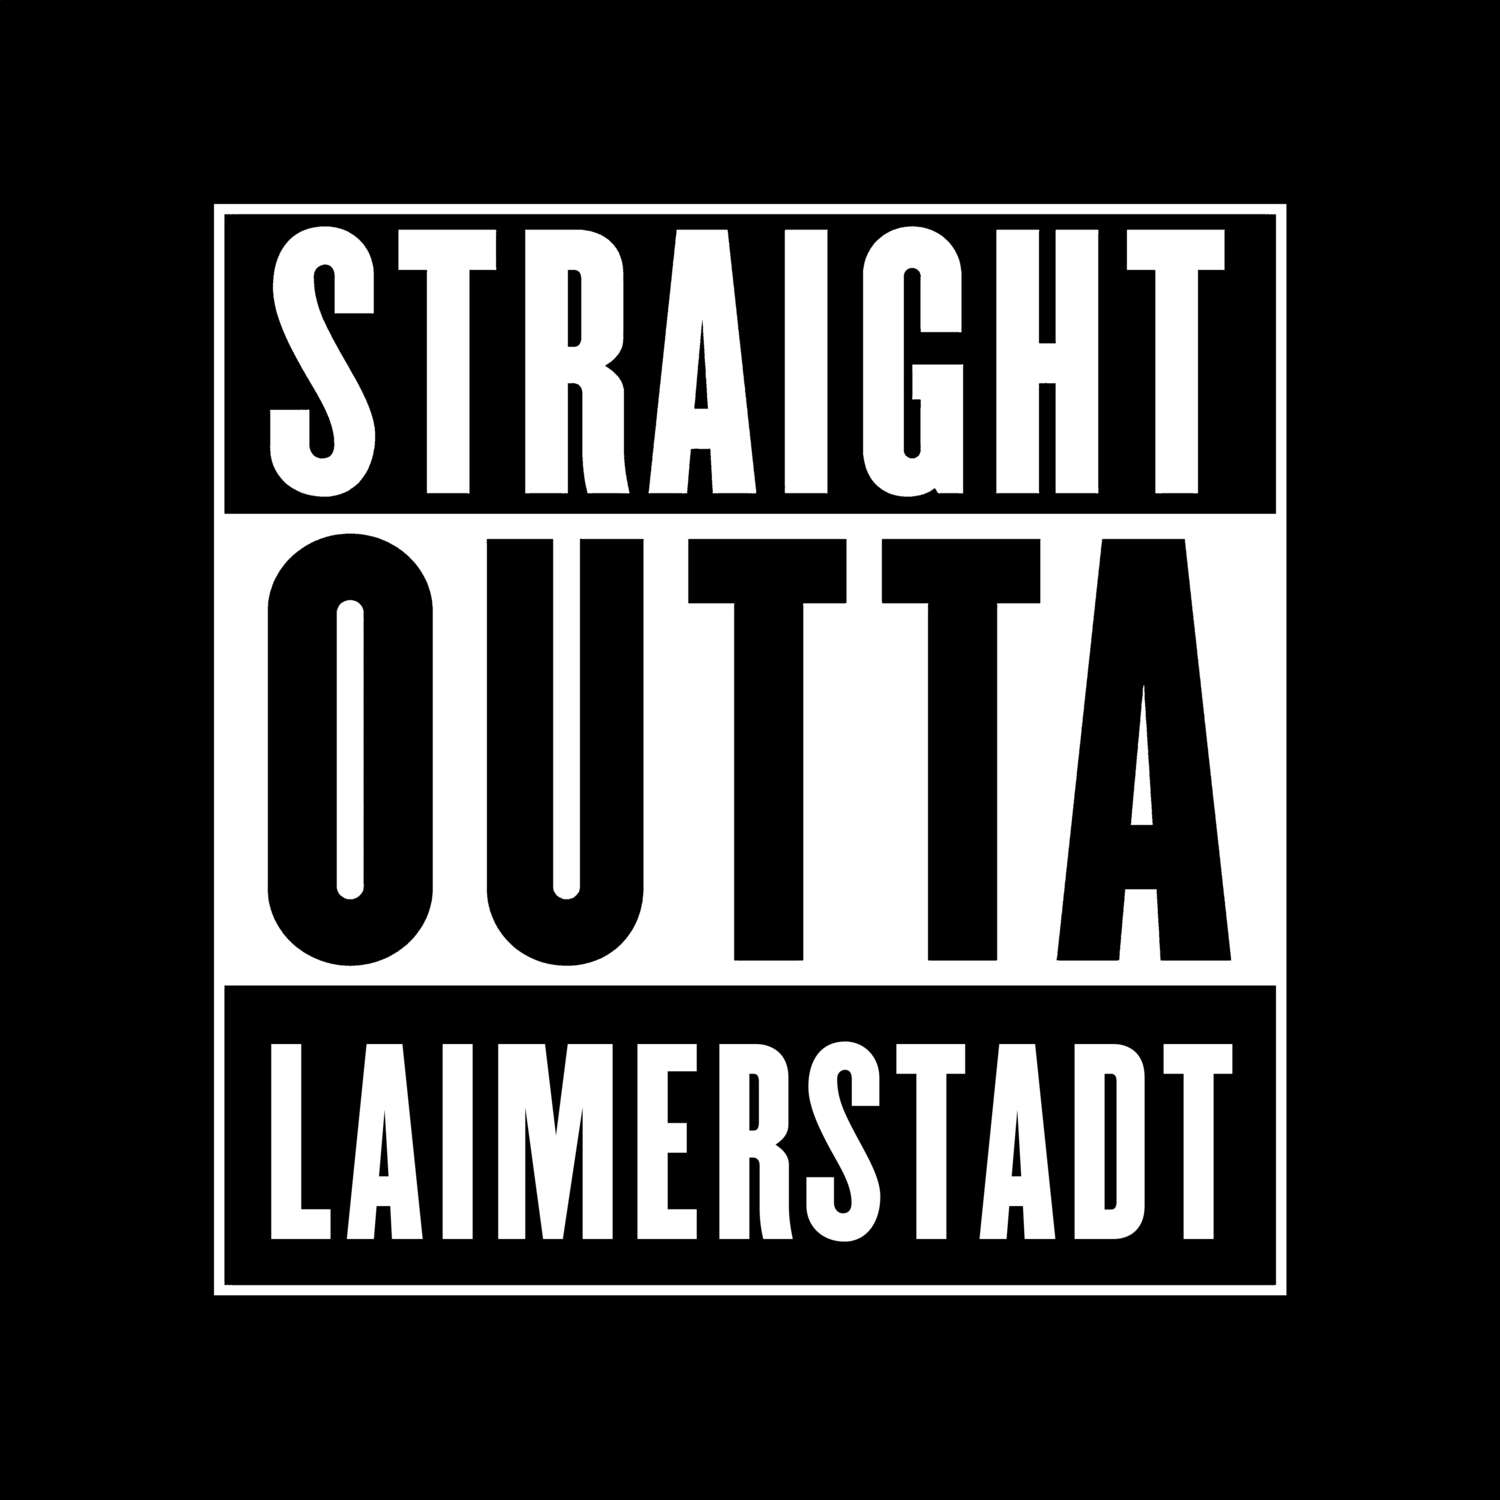 Laimerstadt T-Shirt »Straight Outta«